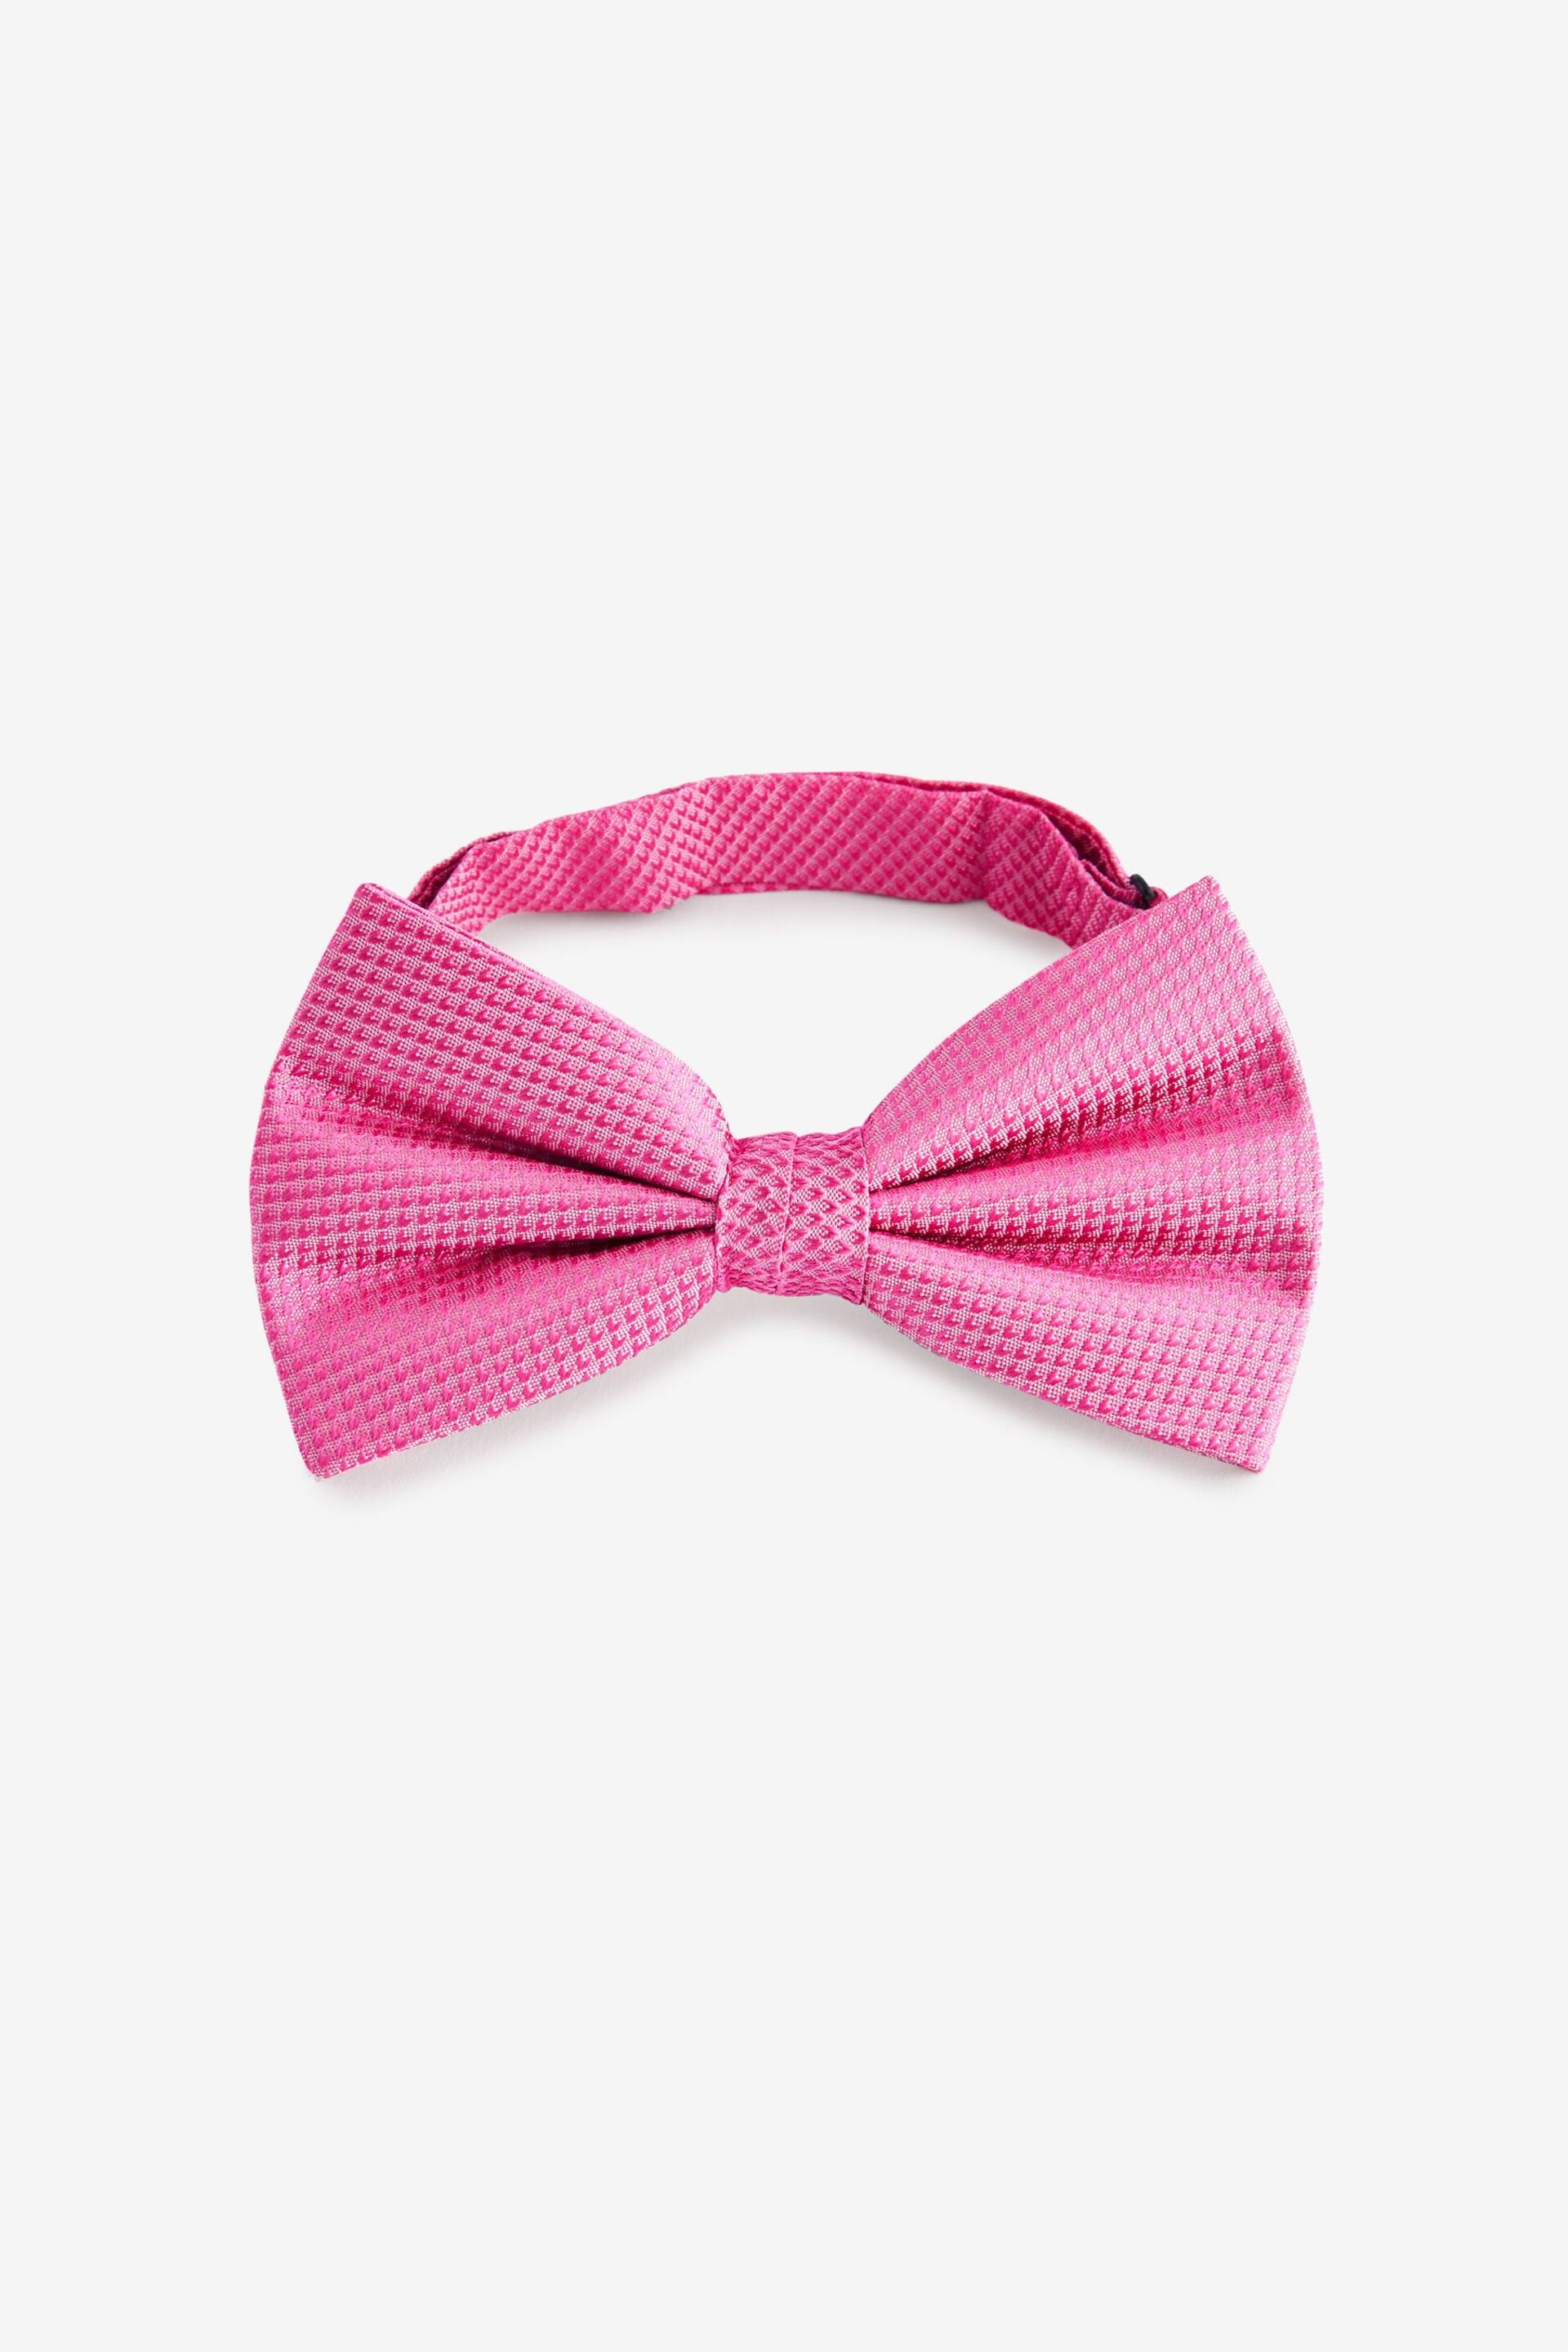 Fuchsia Pink Textured Silk Bow Tie - Image 3 of 4